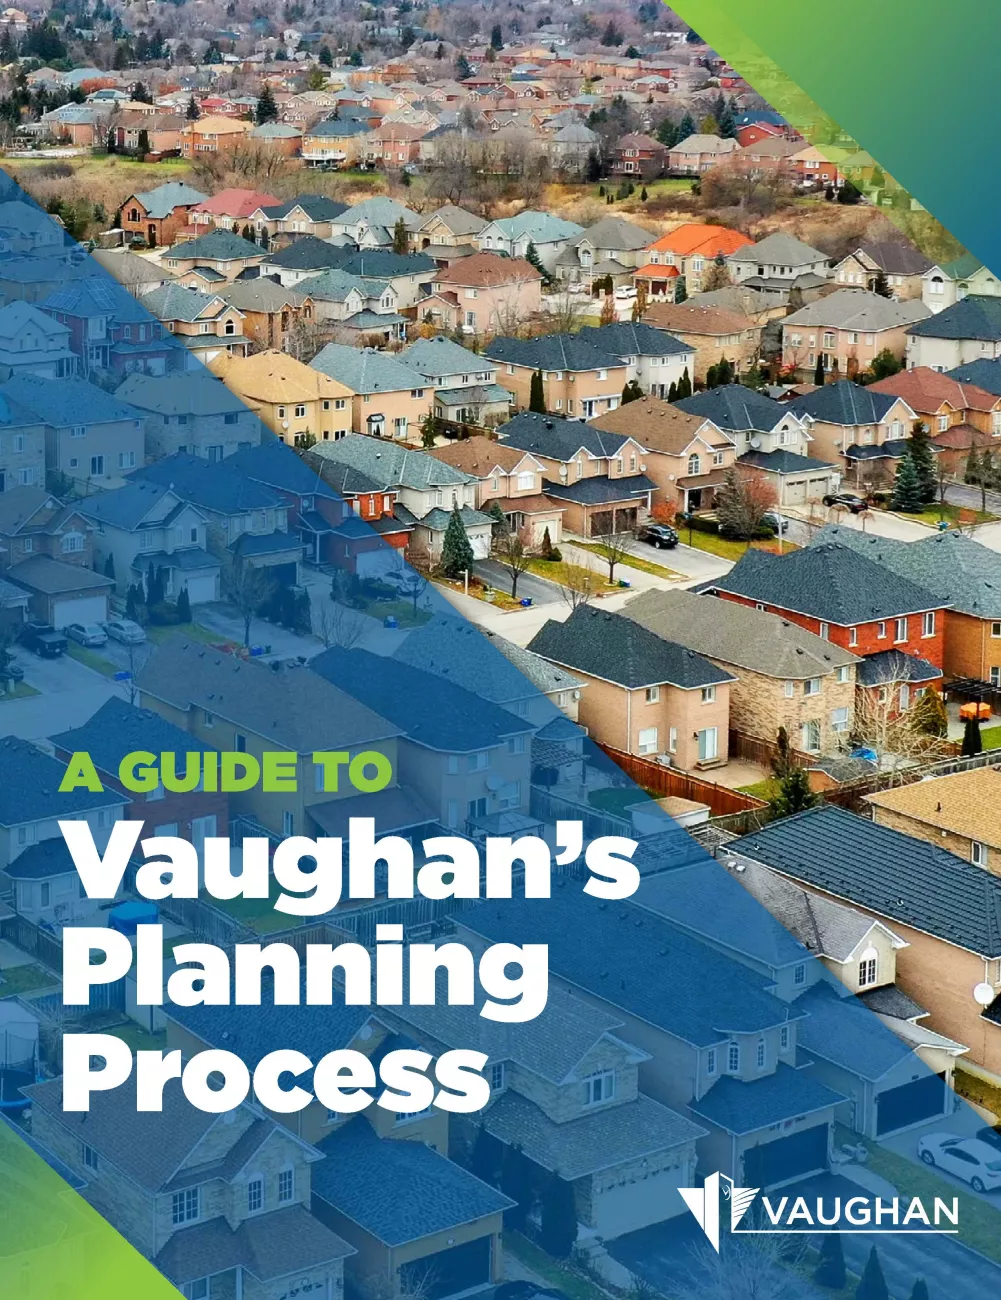 Vaughan's Planning Process